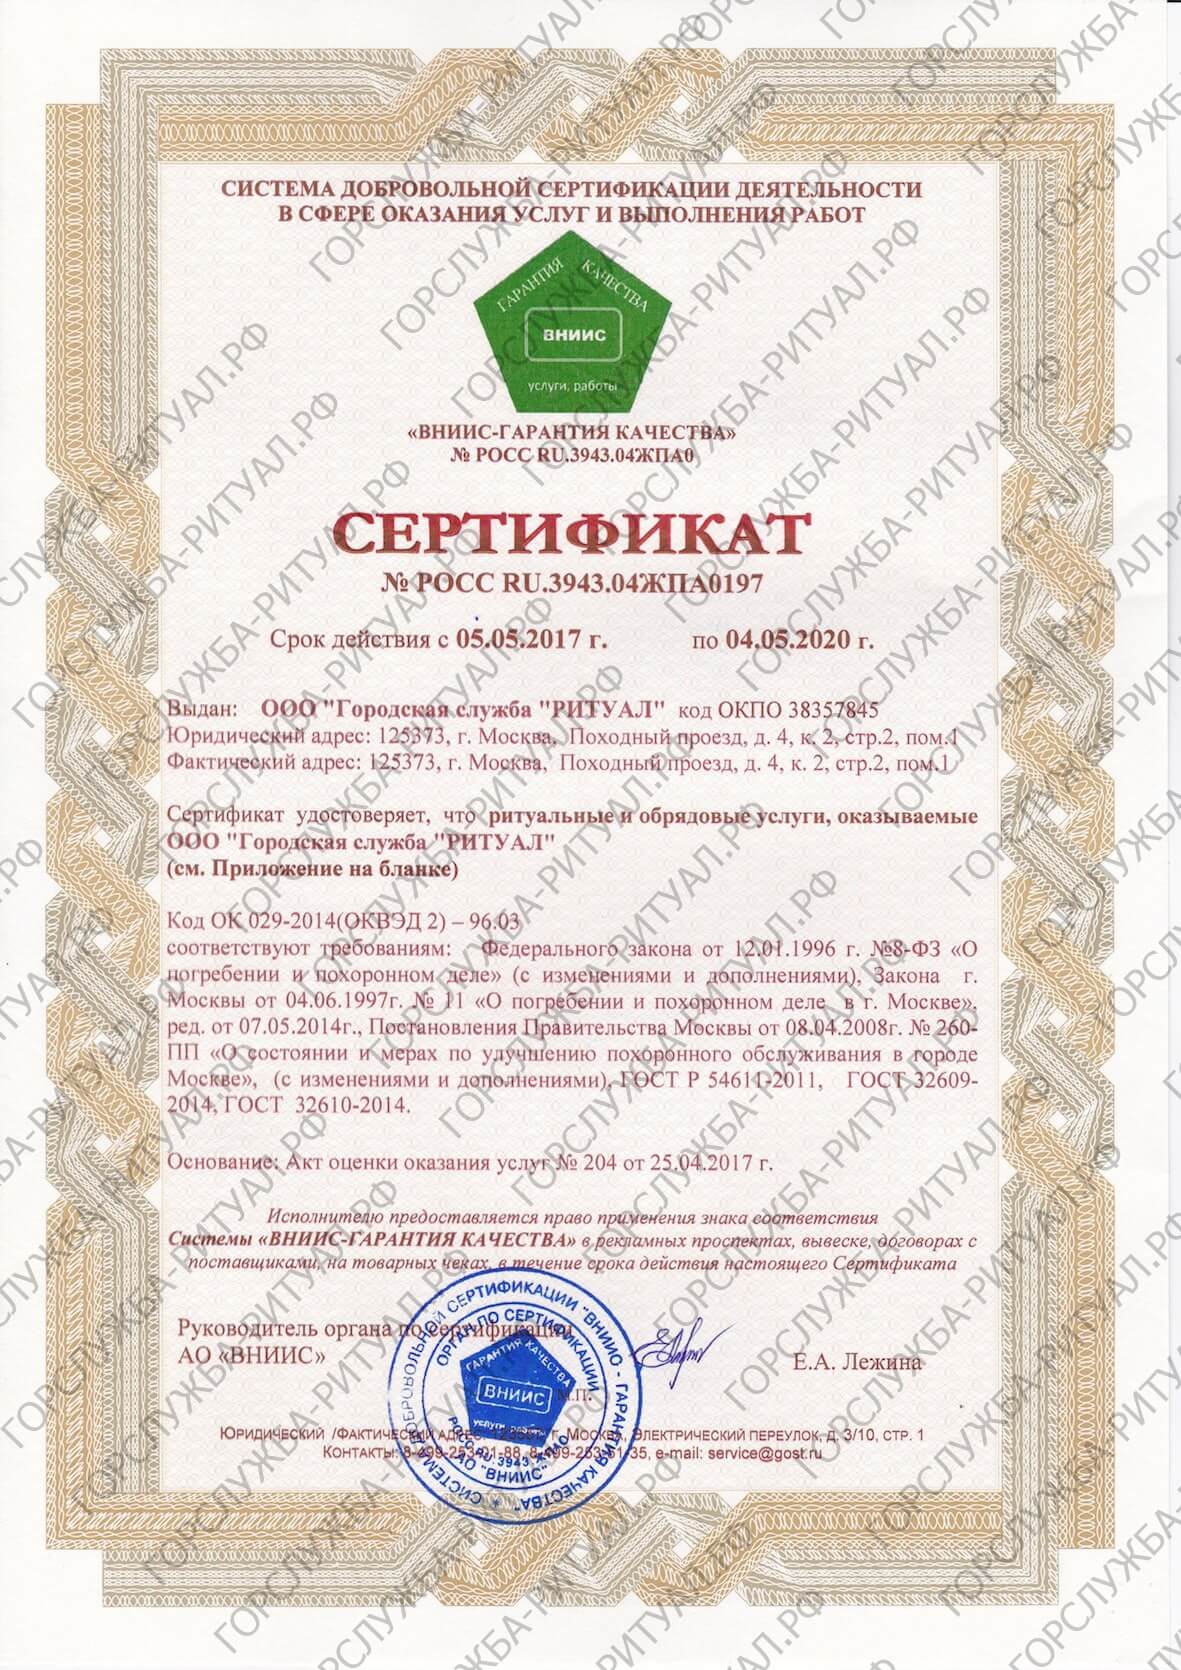 Сертификат №POCC RU.3942.04:GF0197